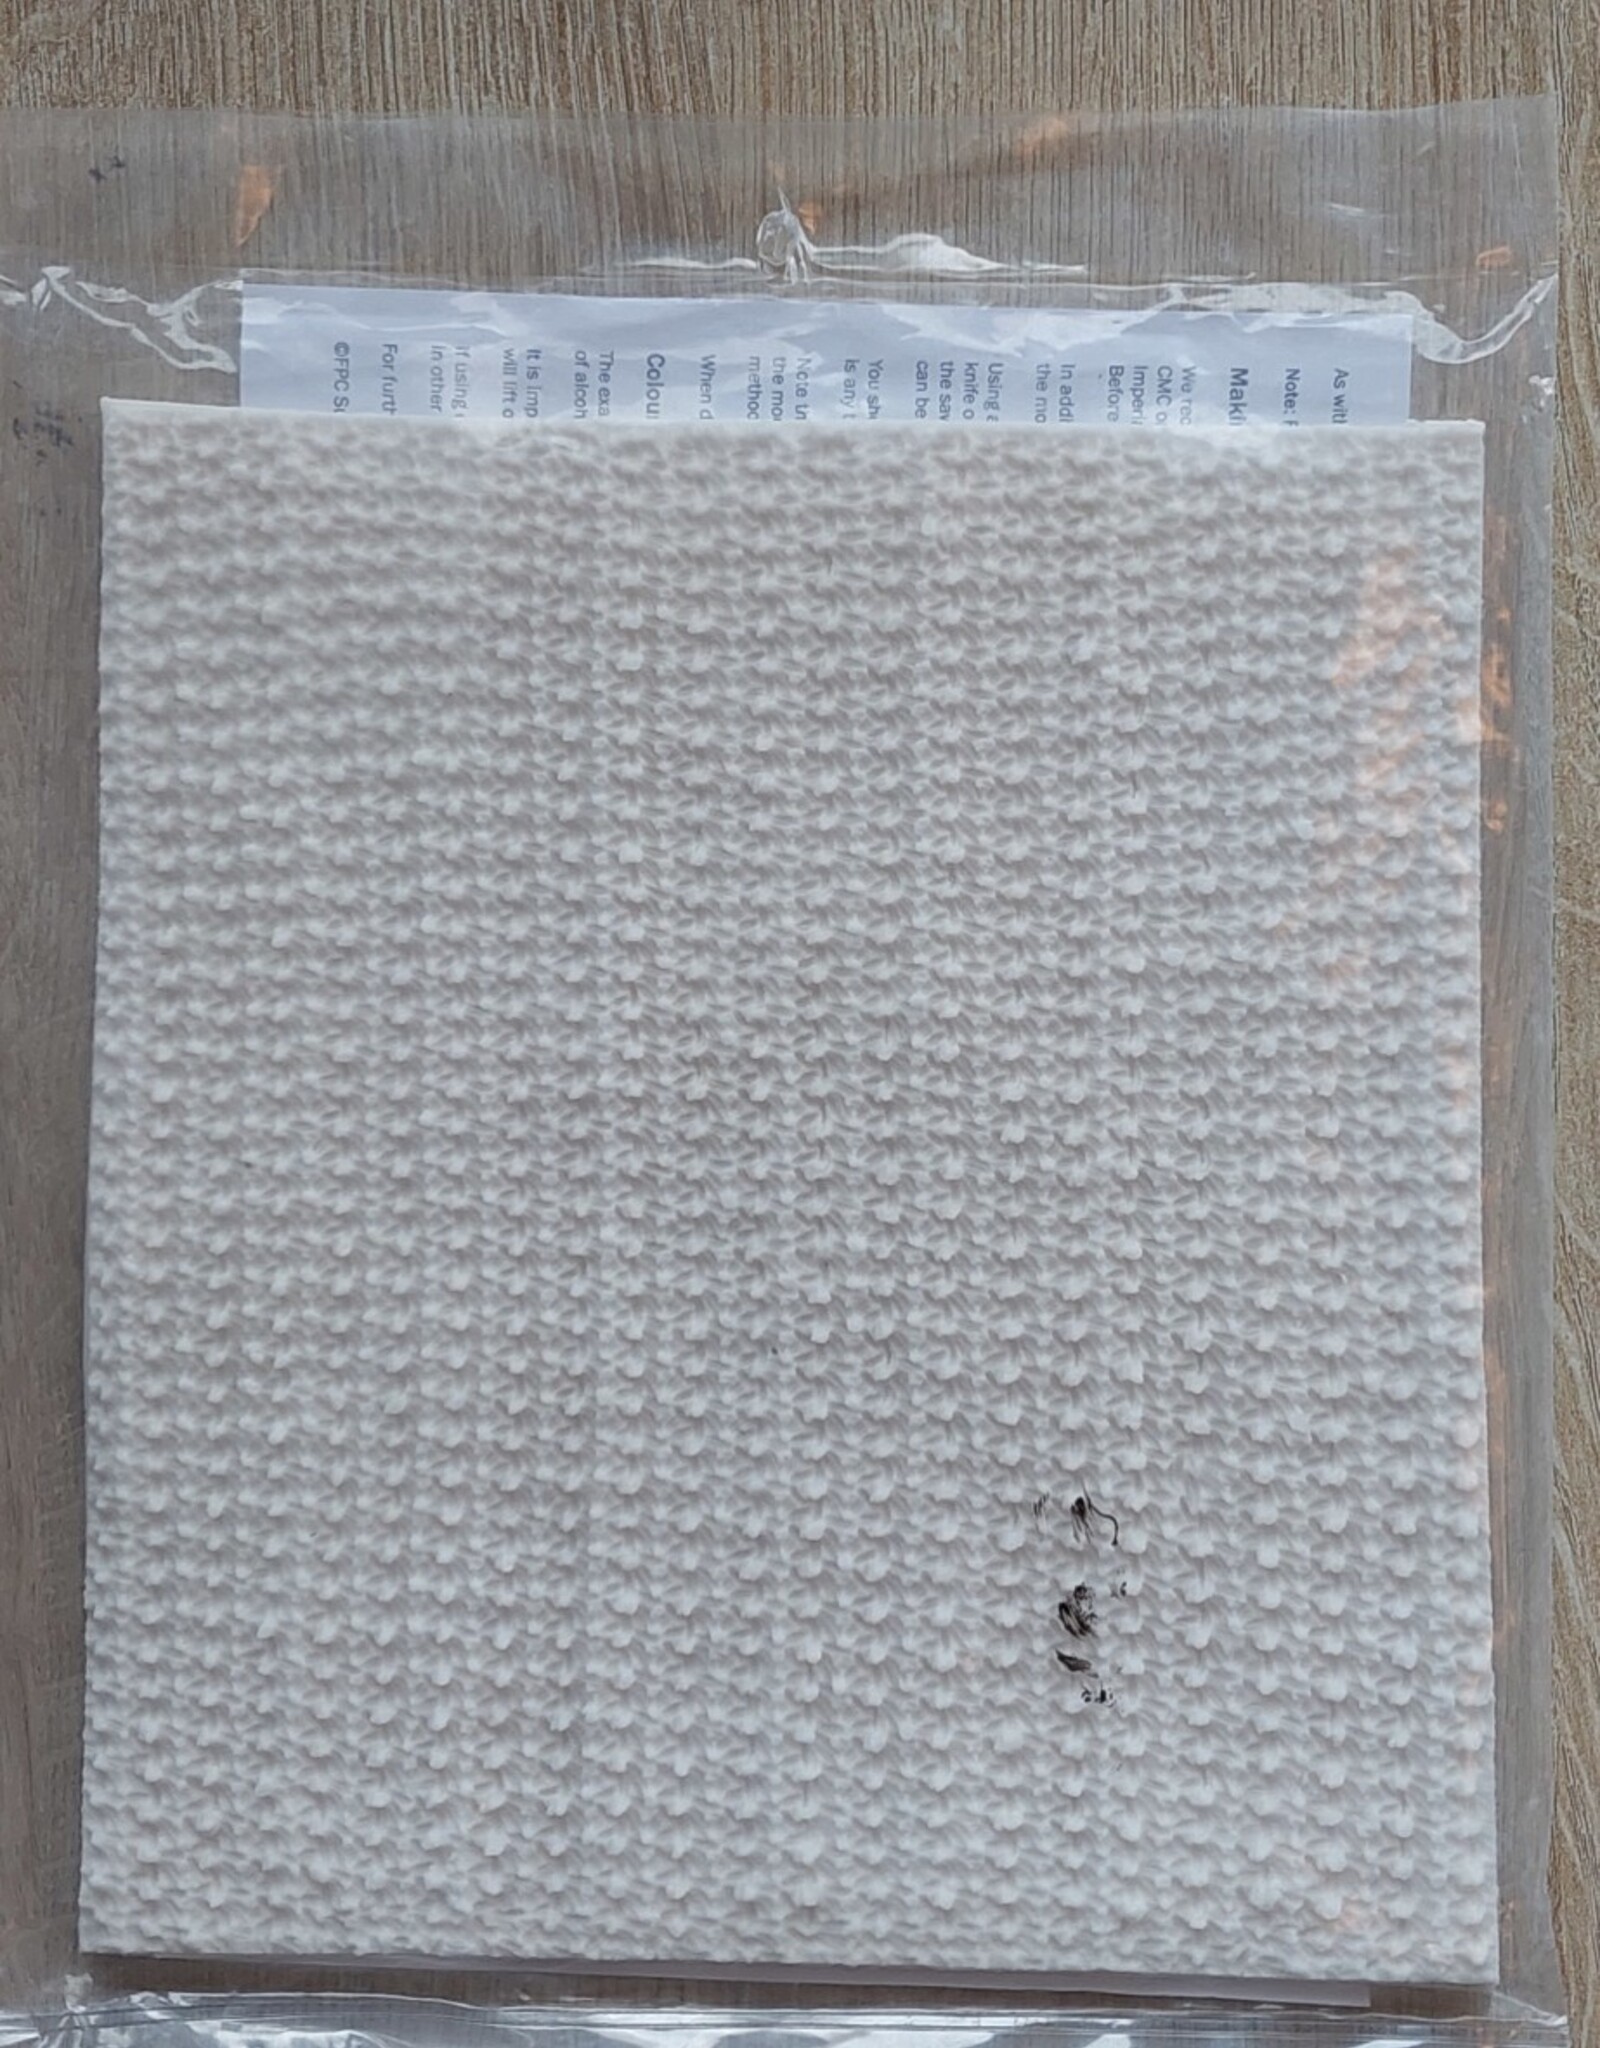 FPC sugarcraft Siliconen mal  Crochet  texture mat  C220